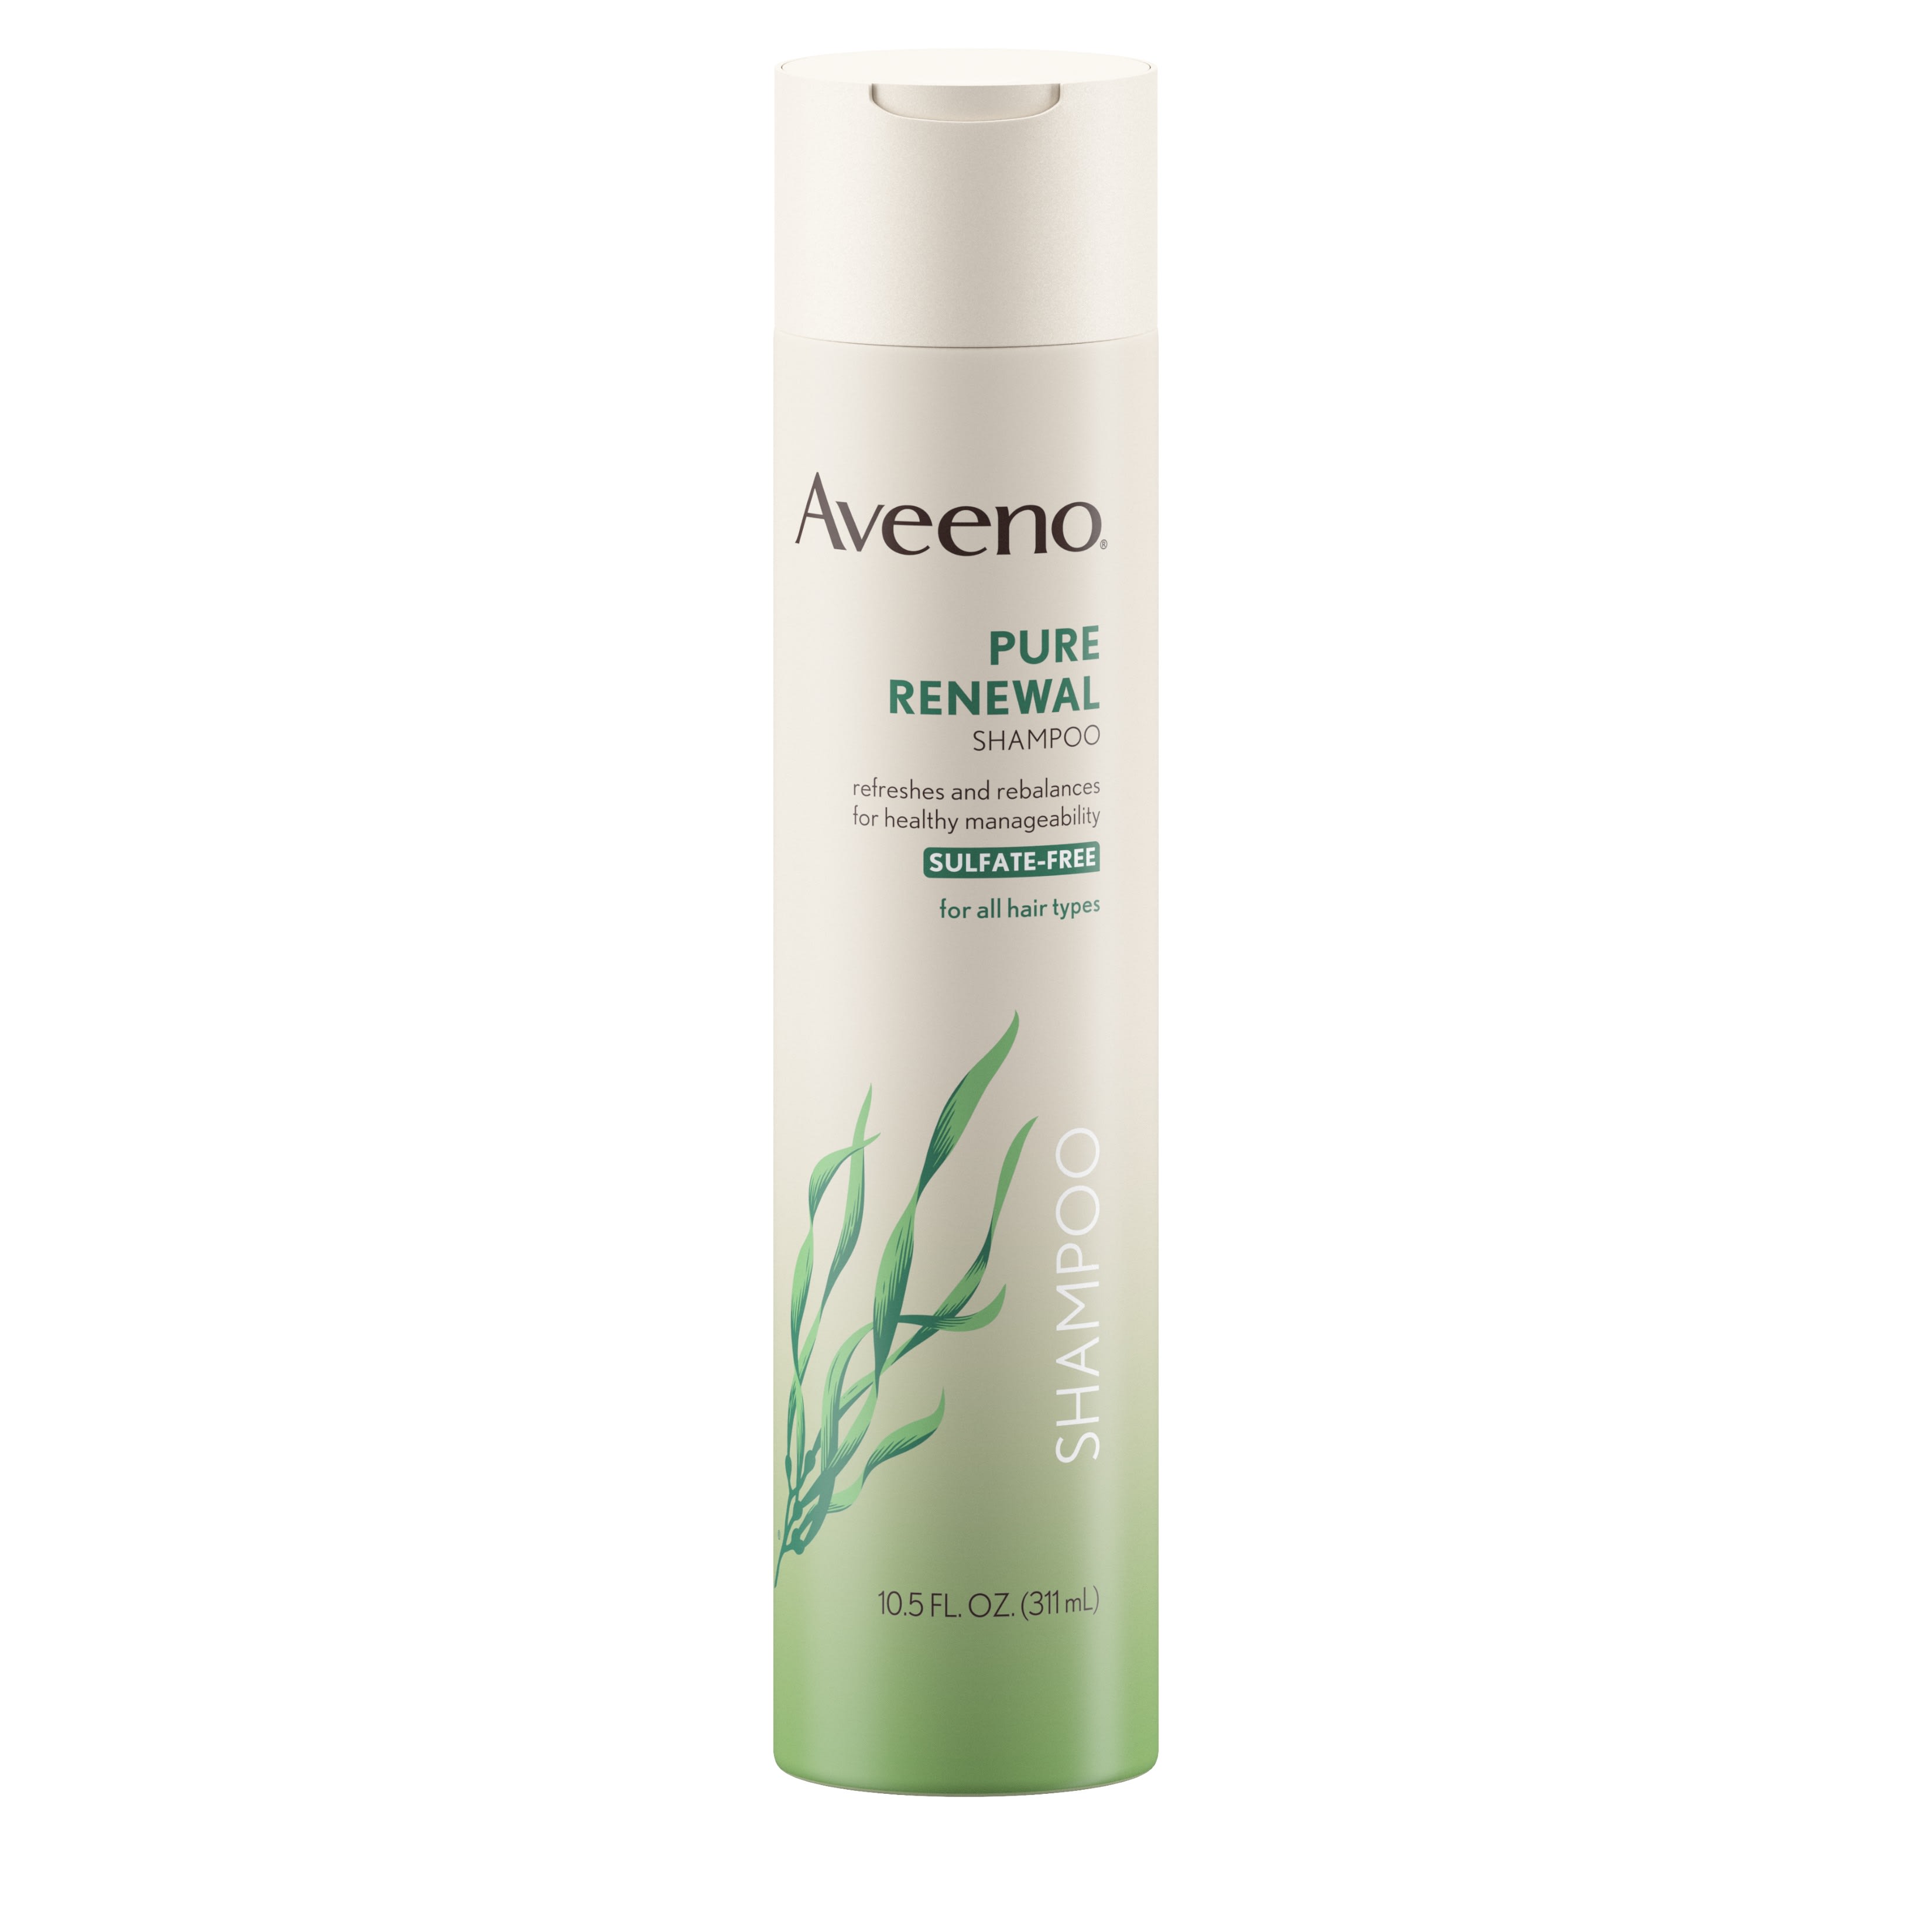 Aveeno Active Naturals Pure Renewal Moisturizing Daily Shampoo with Seaweed Extract, 10.5 fl oz - image 1 of 9